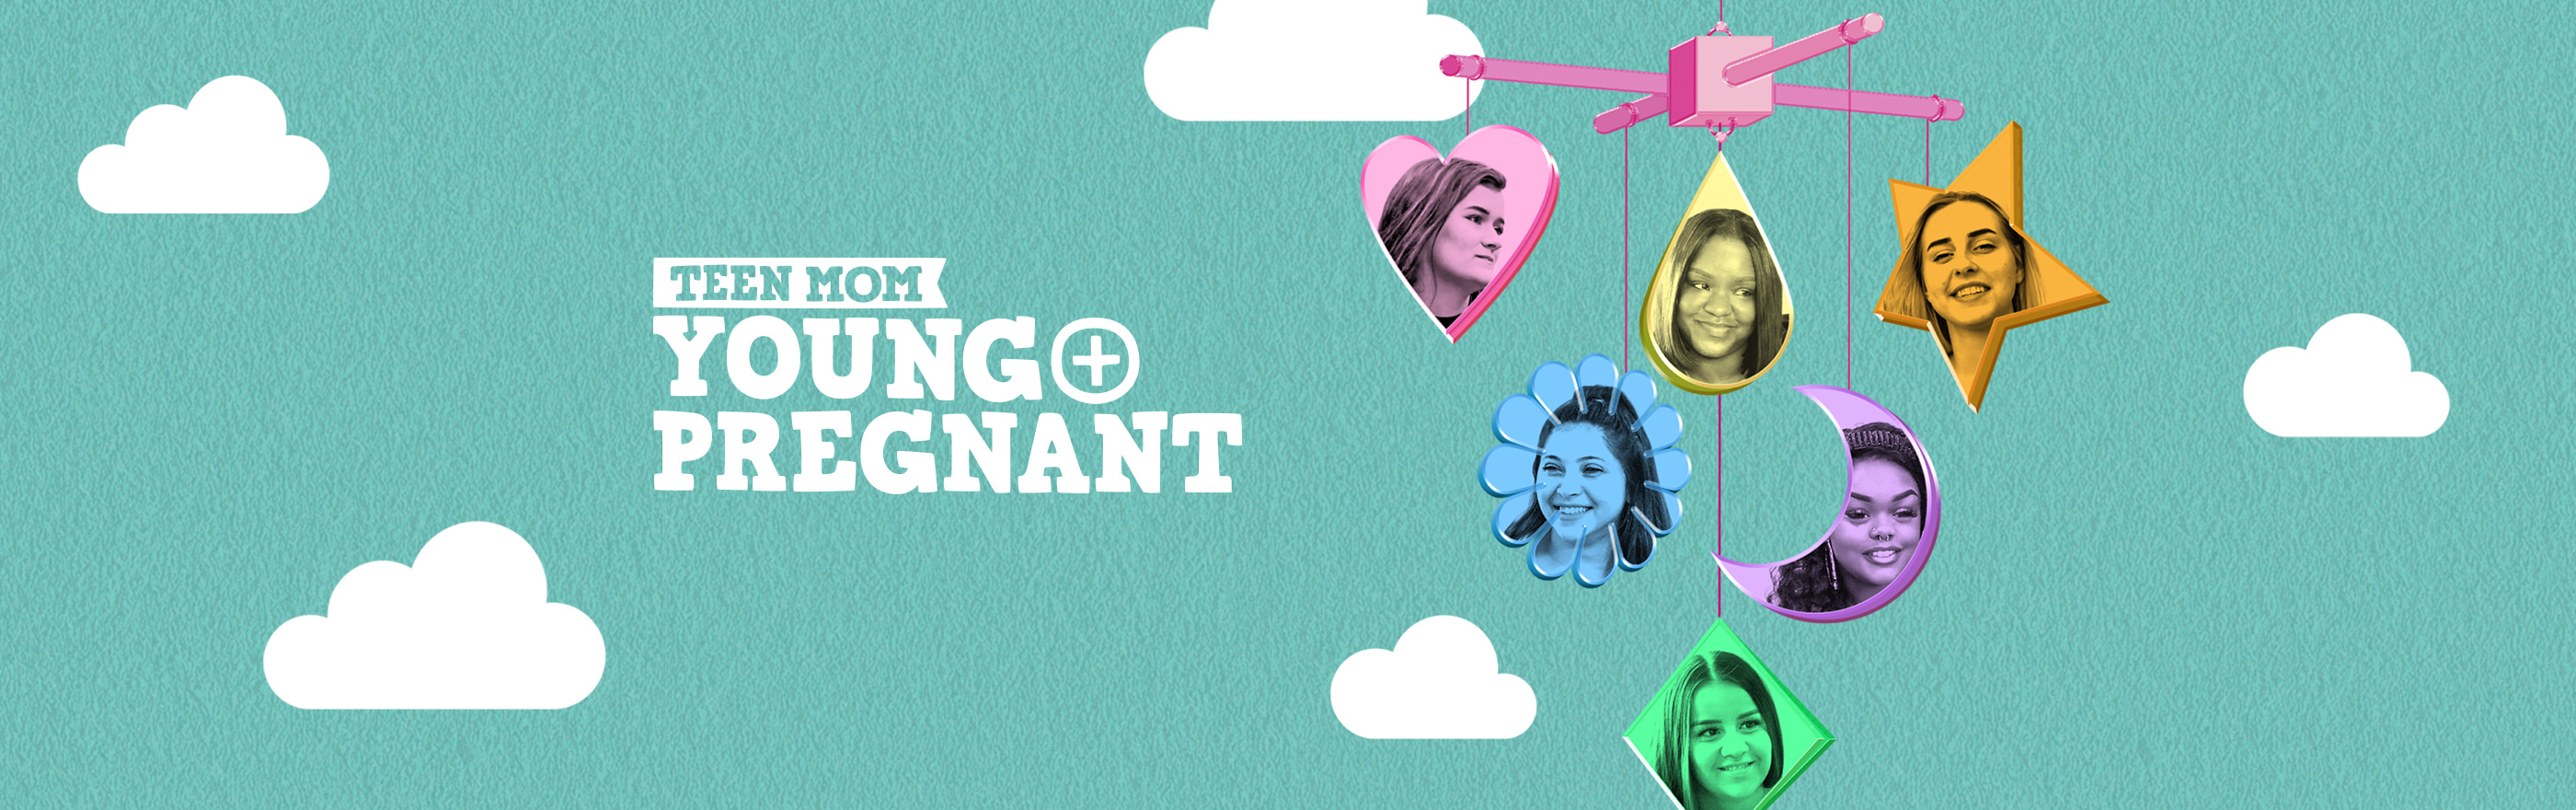 Teen Mom: Young & Pregnant LOGO